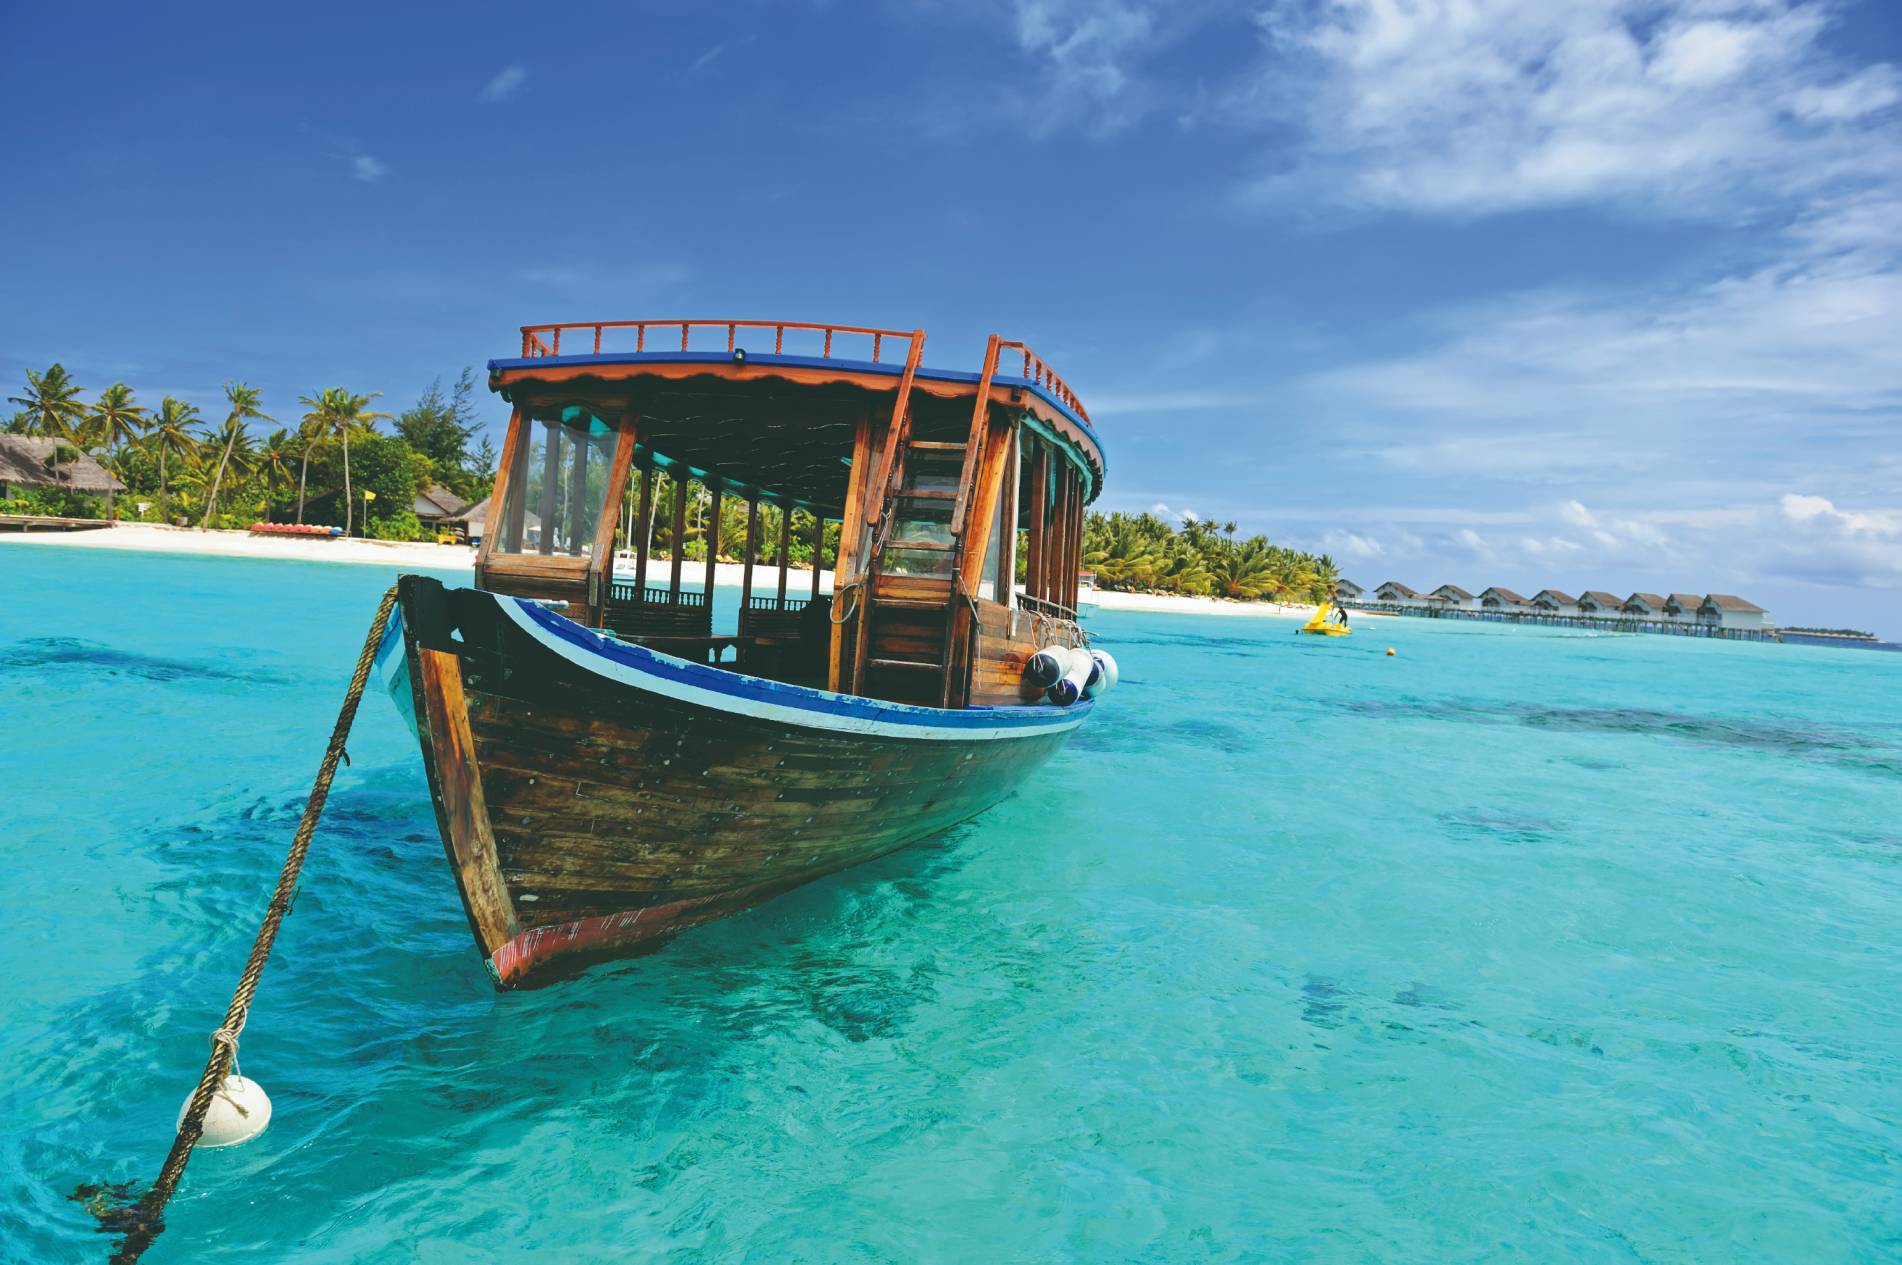 Un dhoni, bateau traditionnel des Maldives.